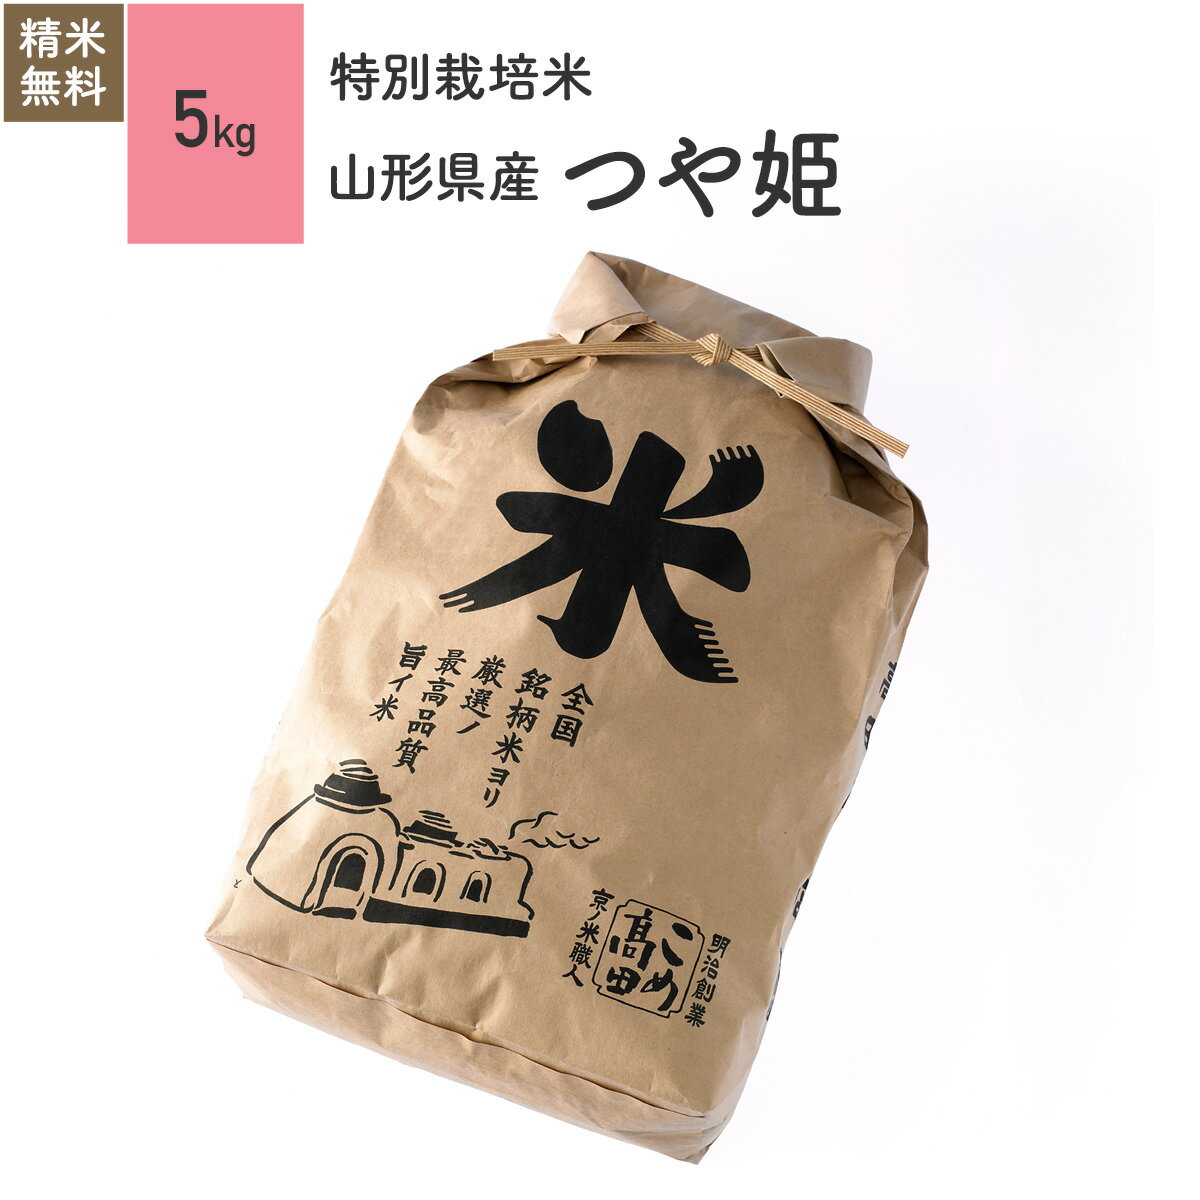 5kg つや姫 山形県産 特別栽培米 令